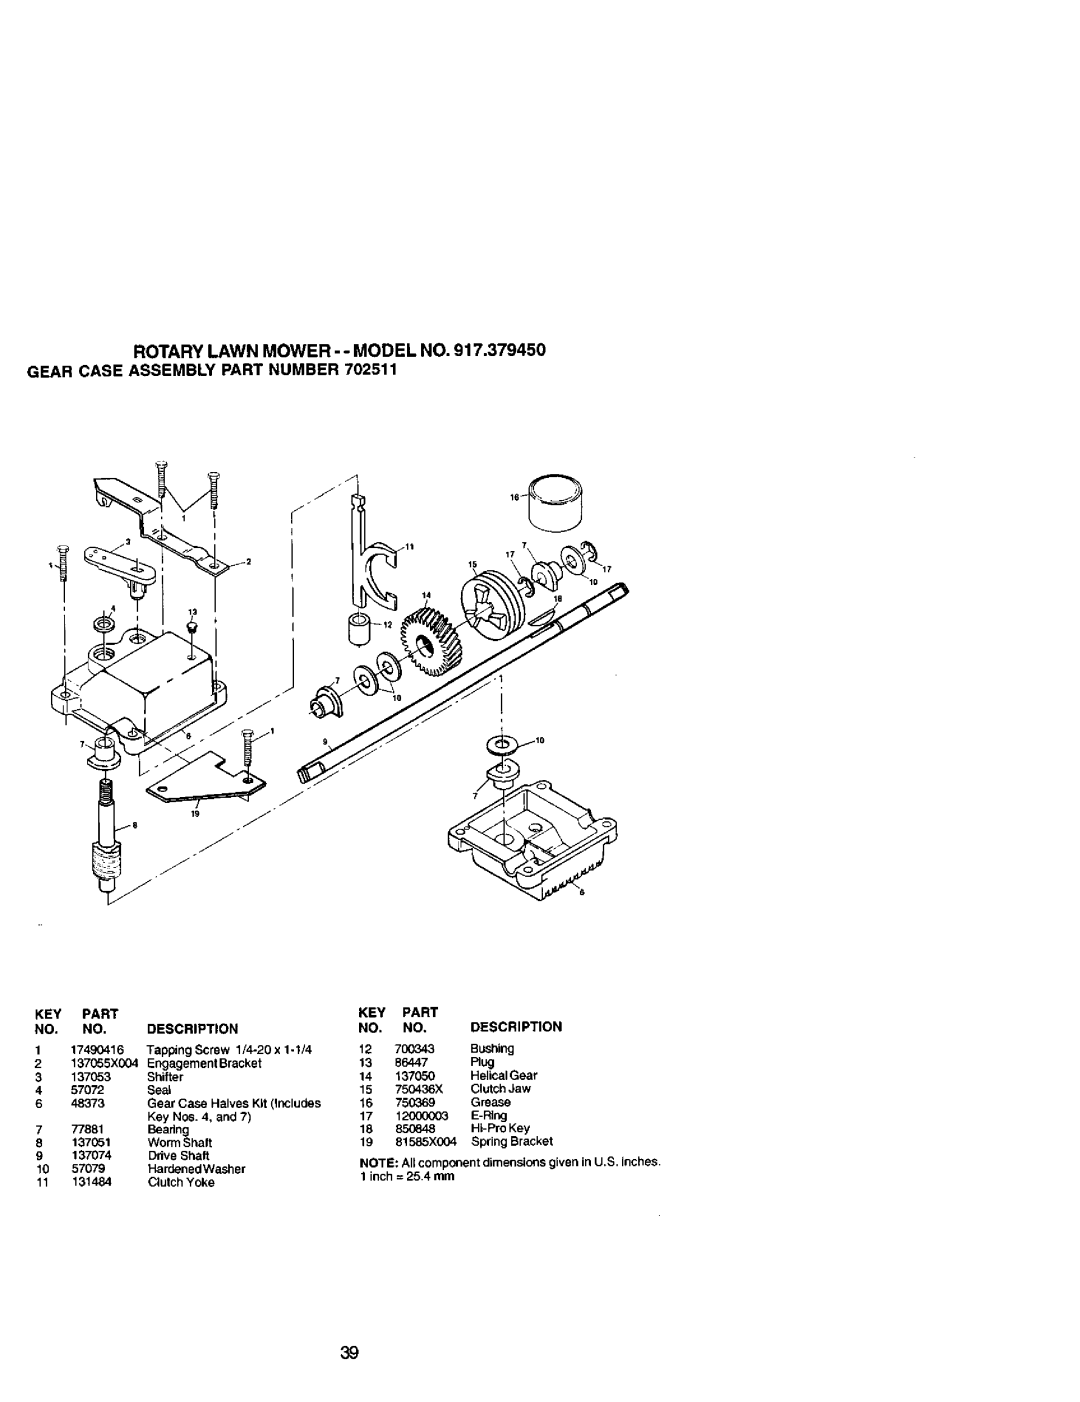 Craftsman owner manual ROTARYLAWNMOWER--MODELNO.917.379450, GEARCASEASSEMBLYPARTNUMBER702511, Part, Description 